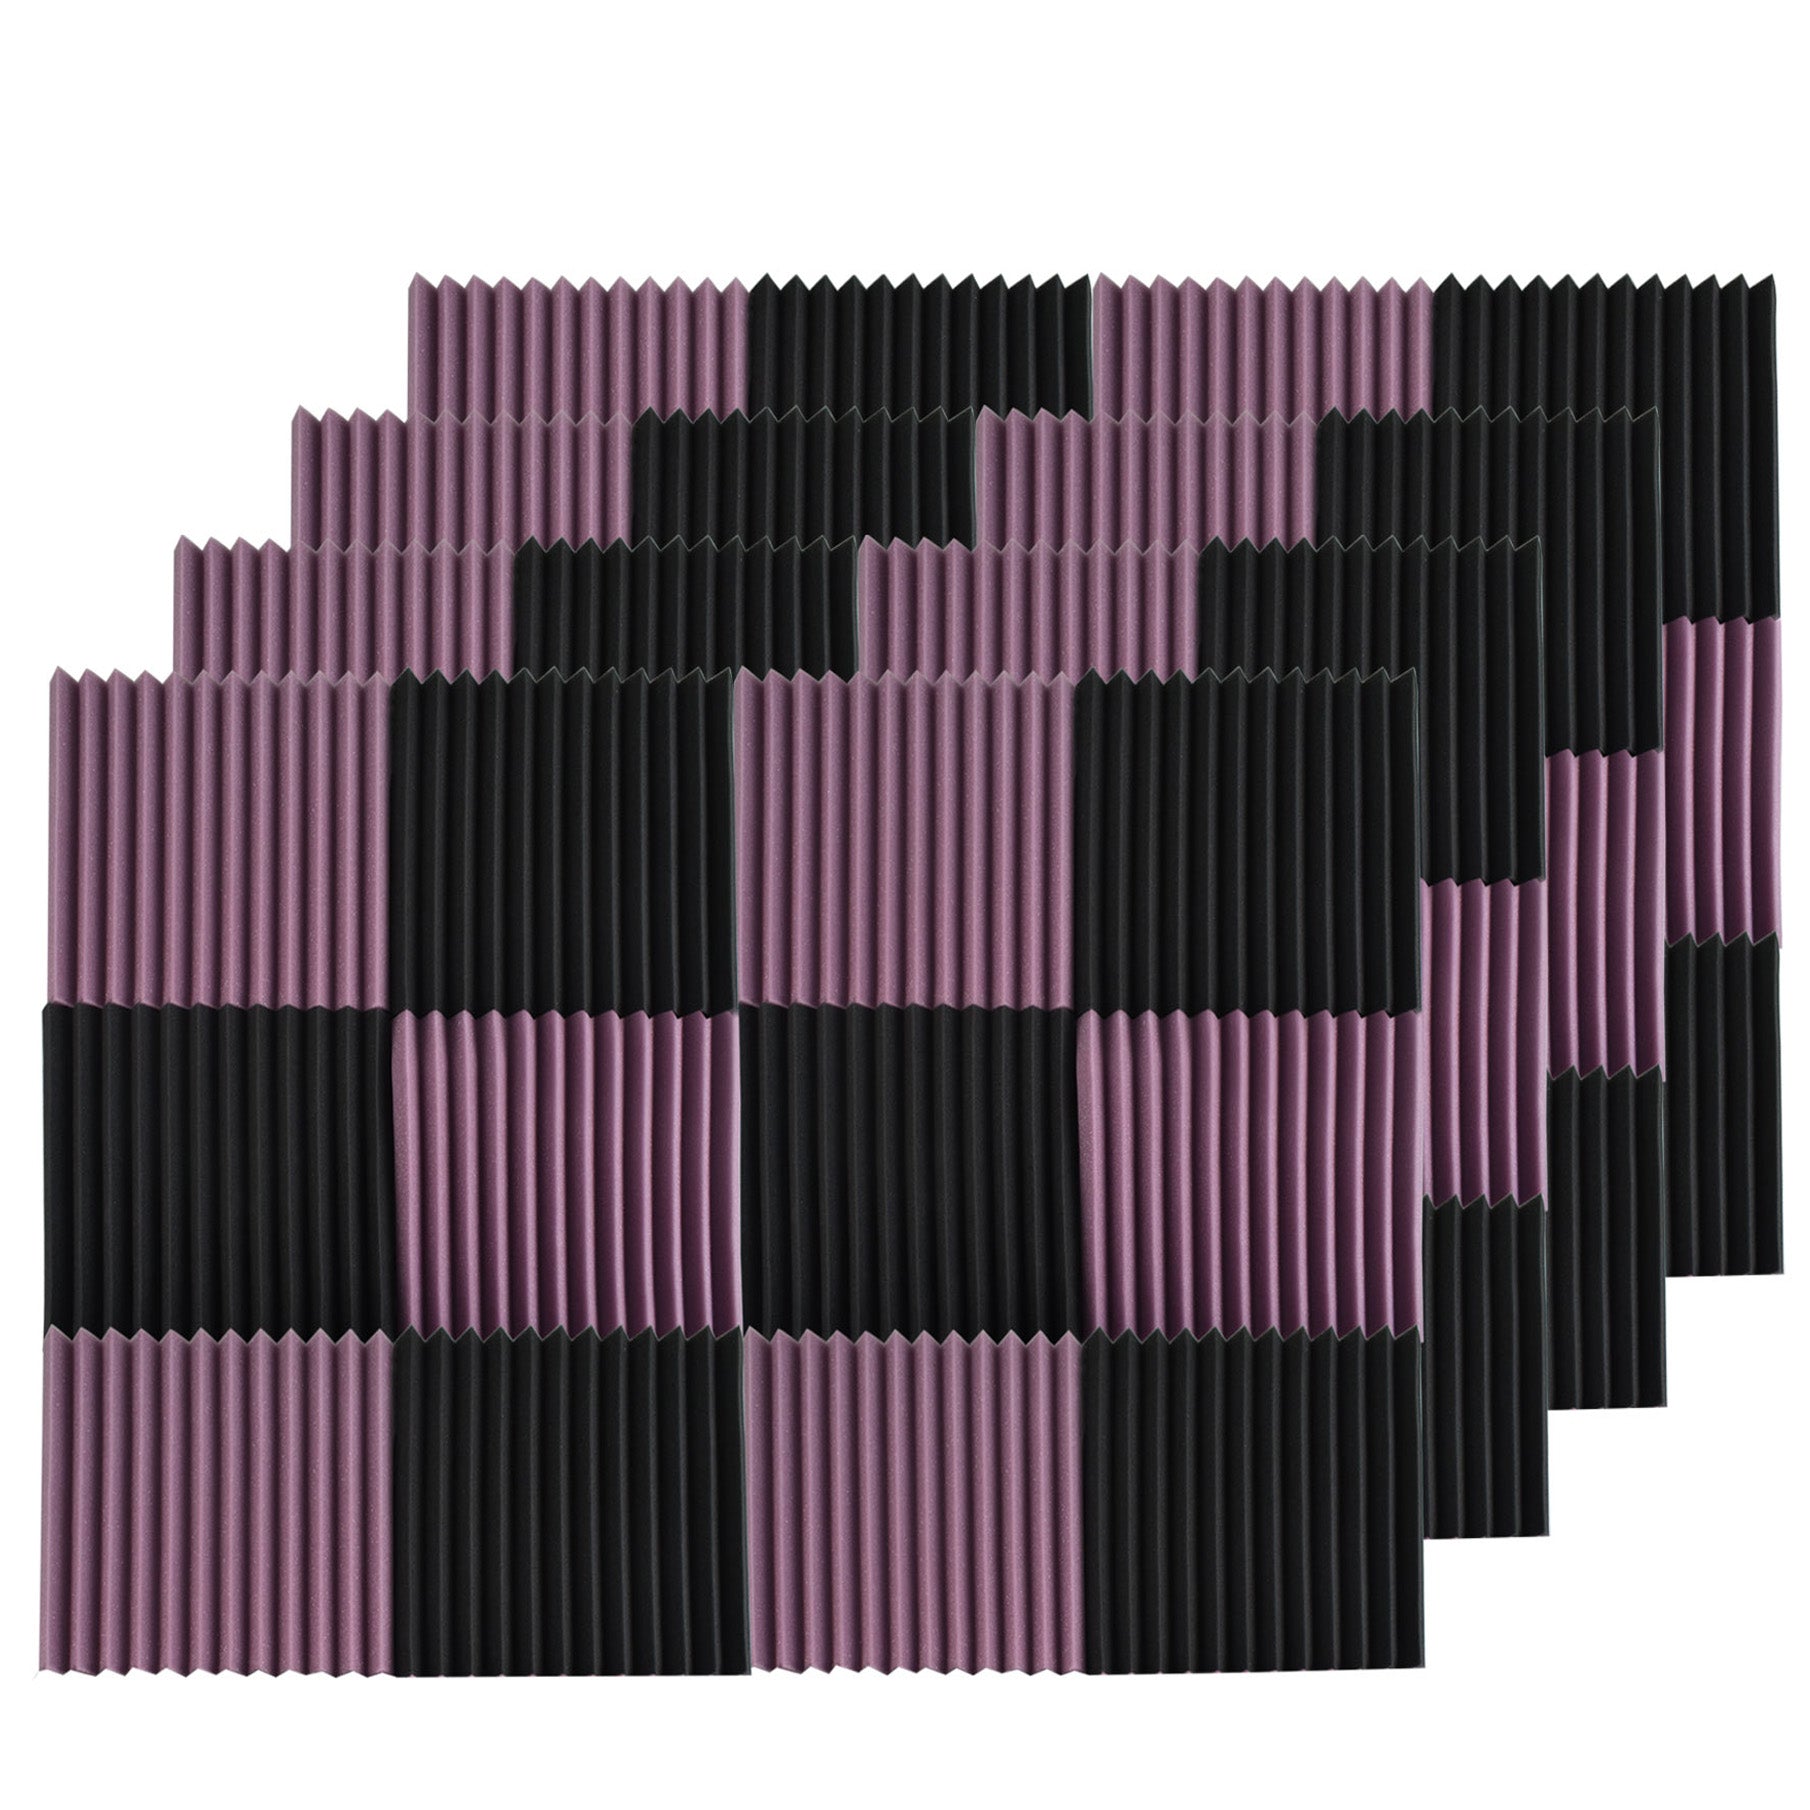 12"×12"×1" Acoustic Foam Panel Studio Wall Soundproofing Tiles purple/Black 48pcs FINDMALLPARTS